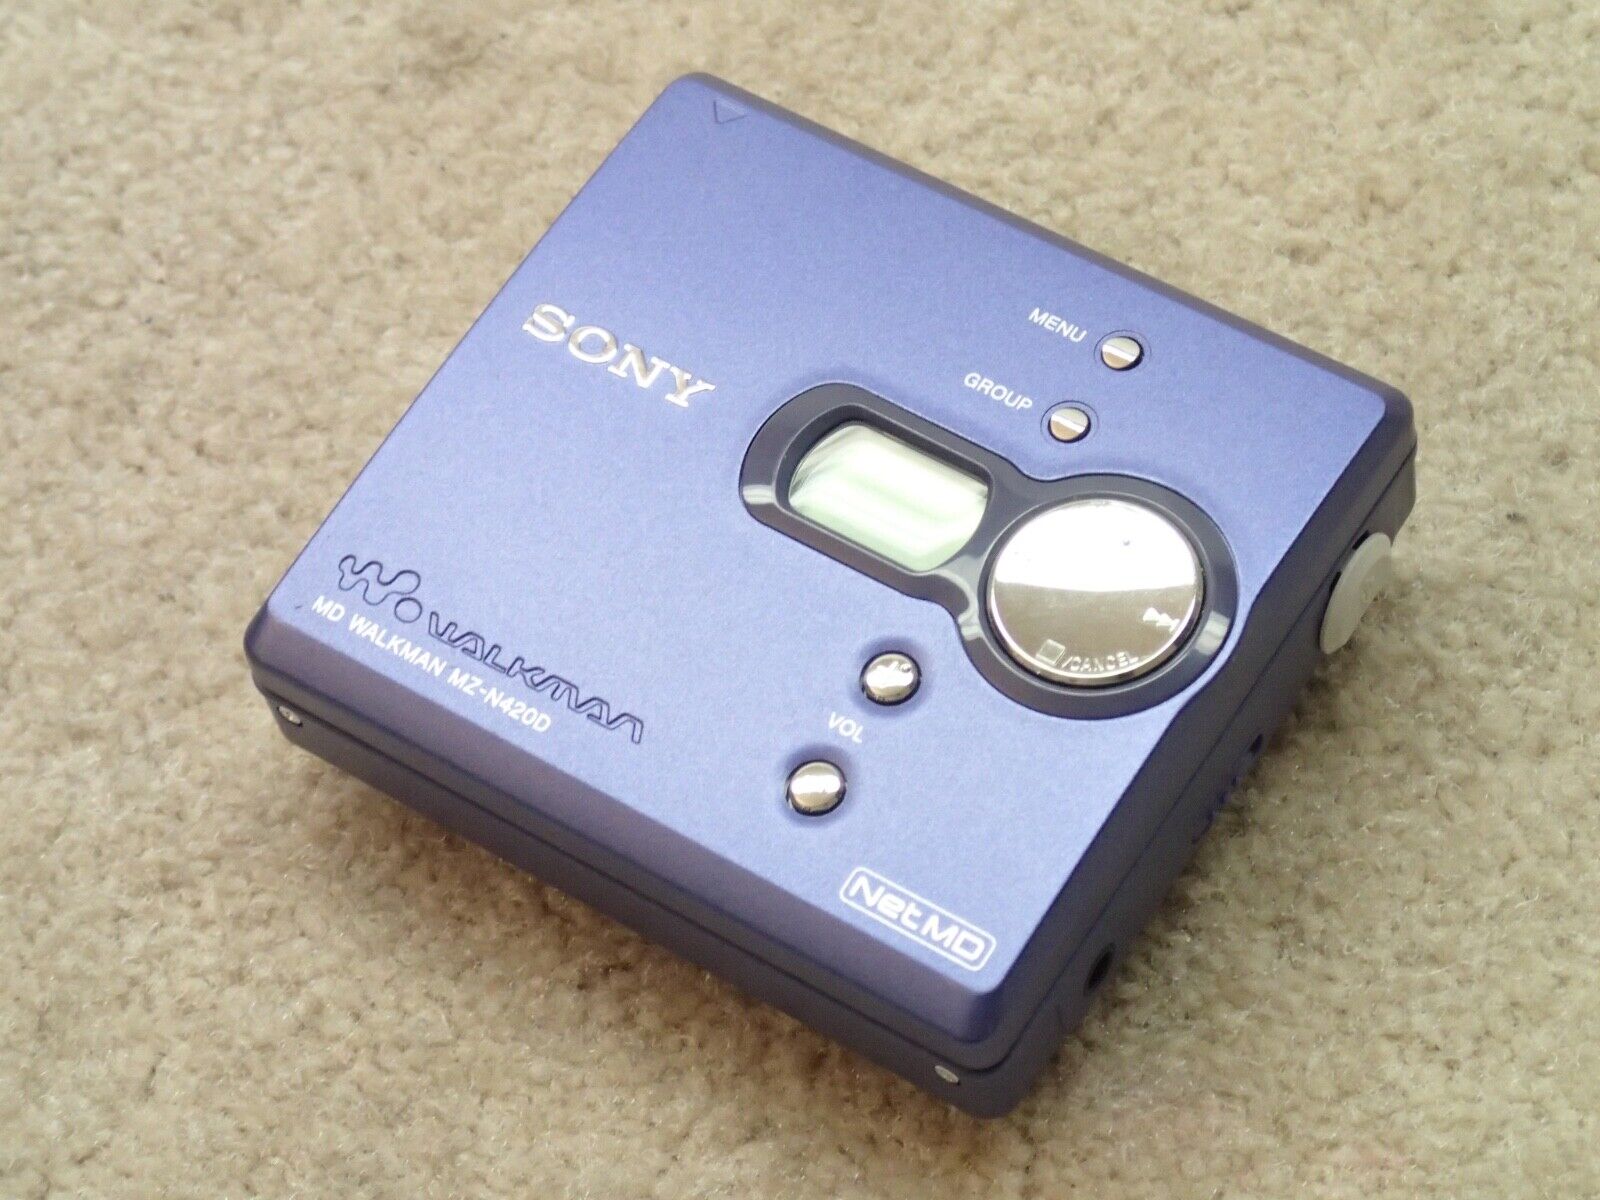 Sony Mz-n420d Vintage Md Mini Disc Walkman Player Not Working